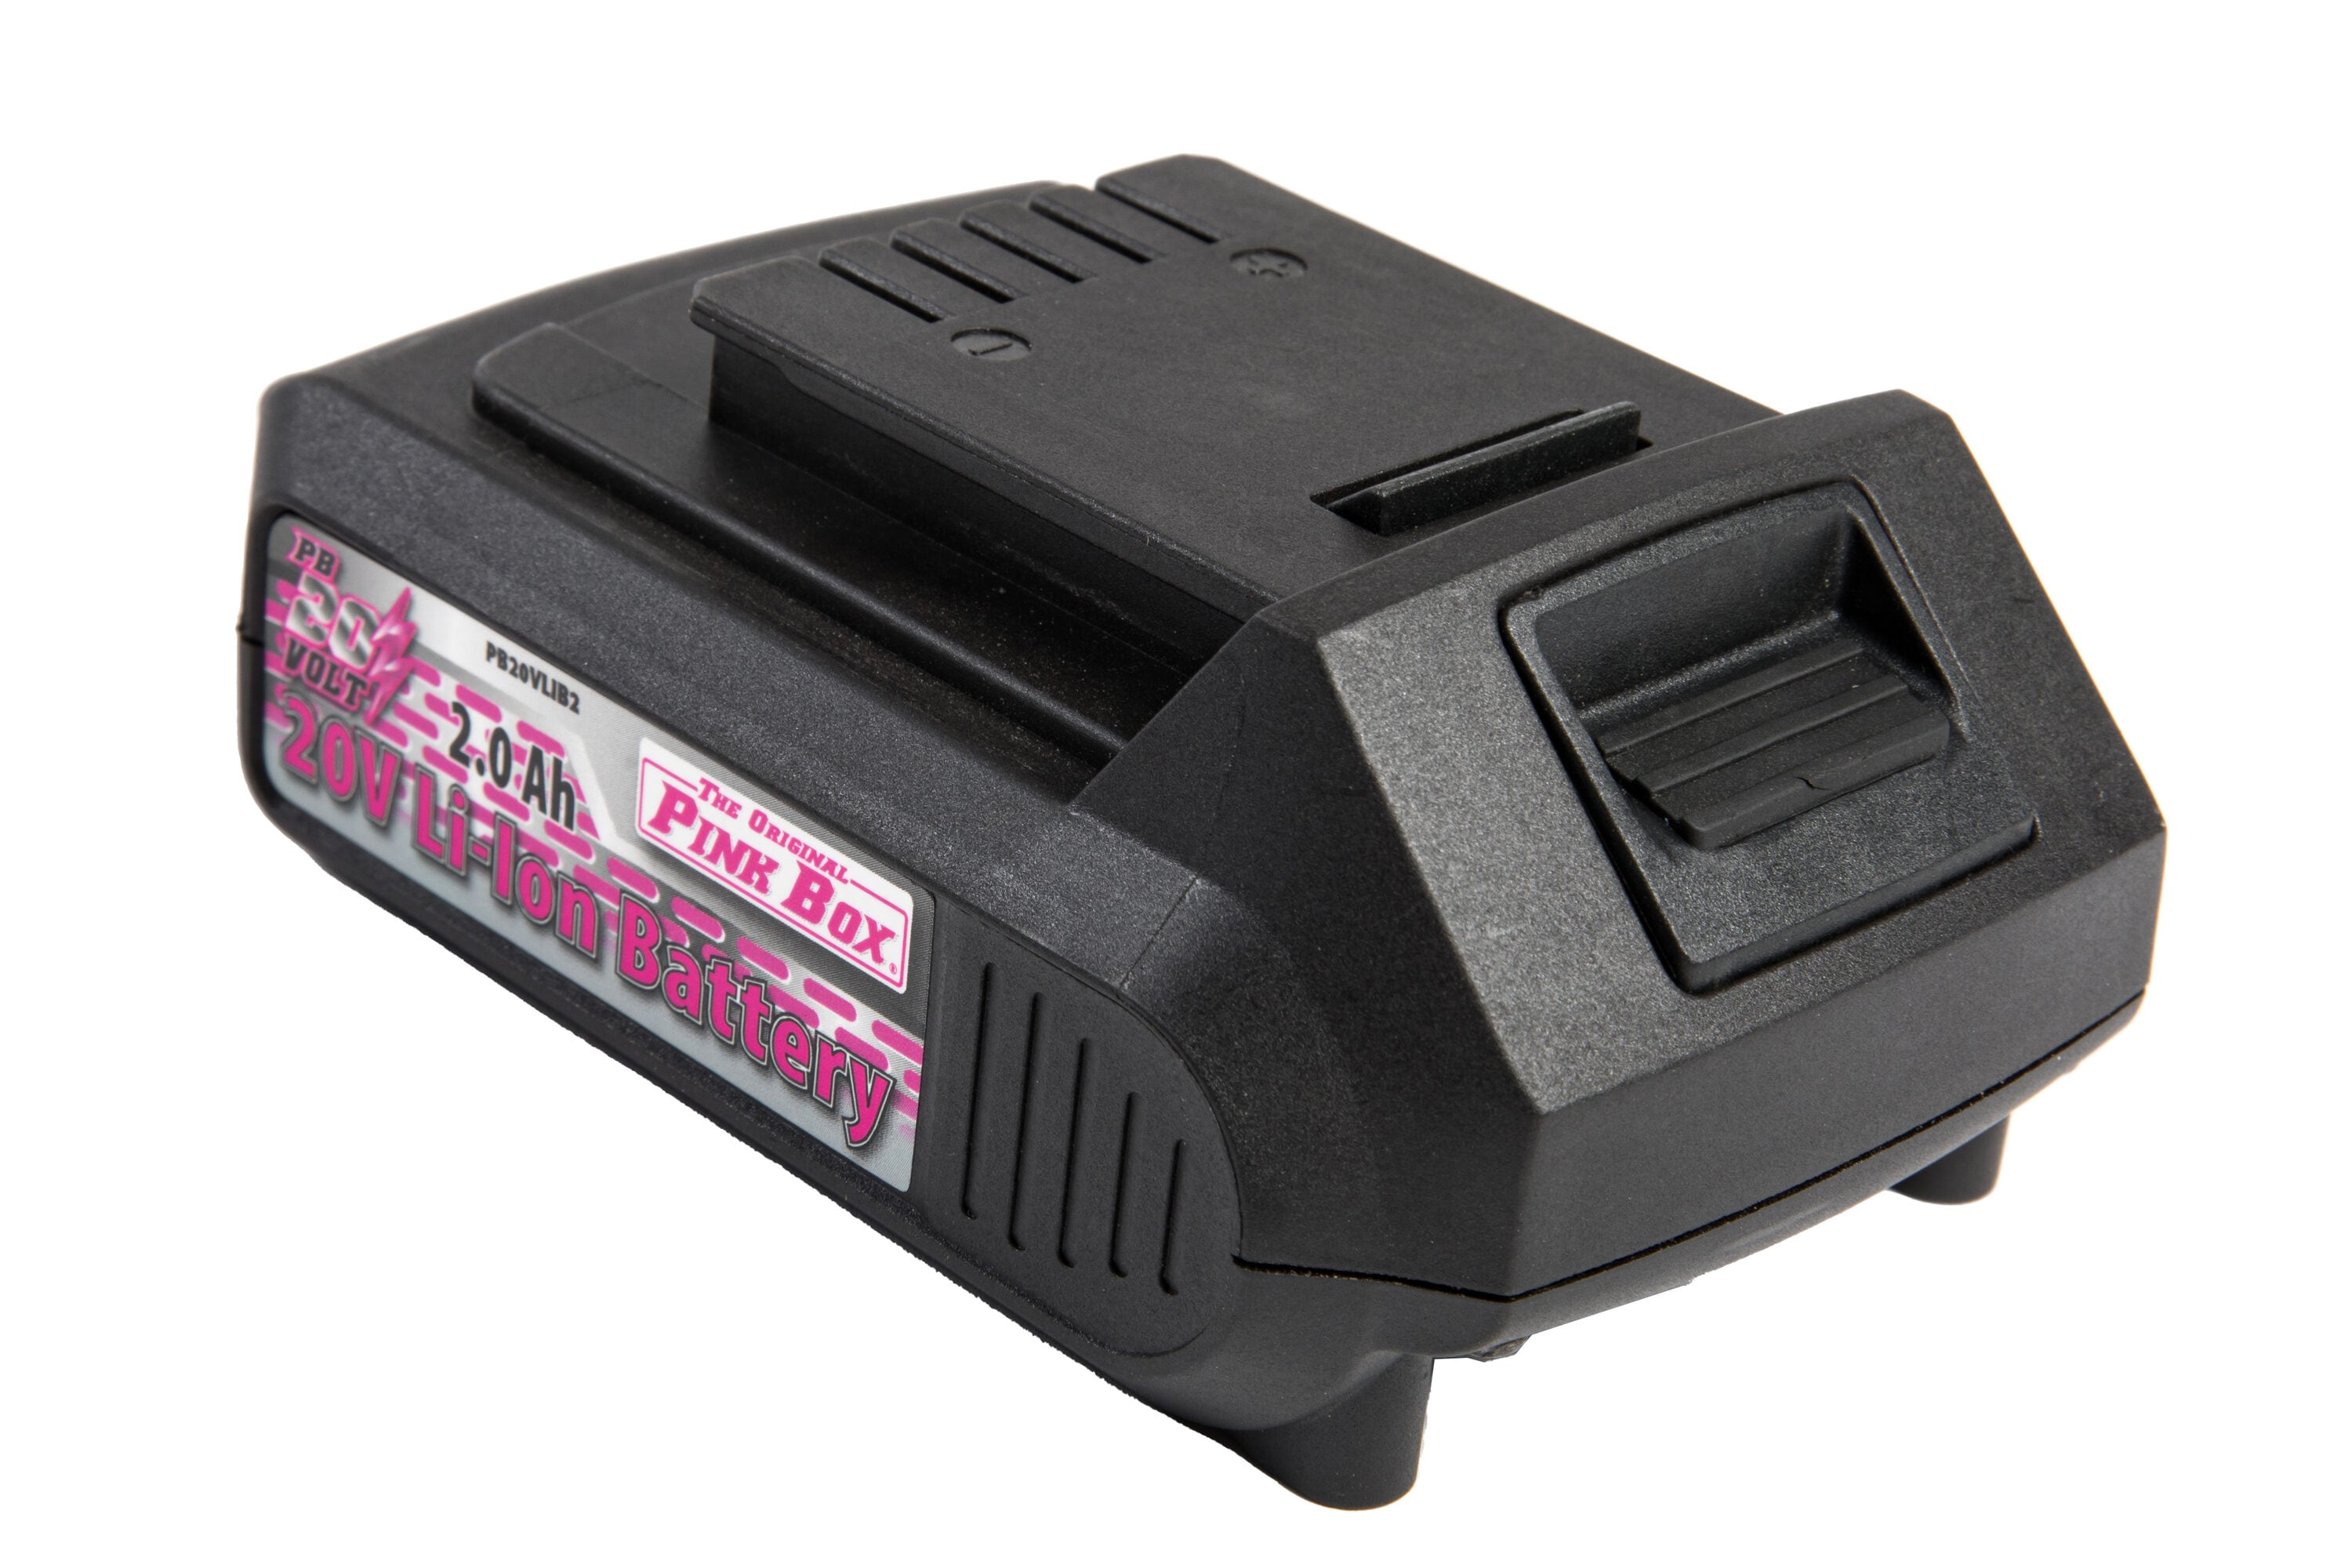 Hot Glue Gun, 20V Pink Cordless … curated on LTK